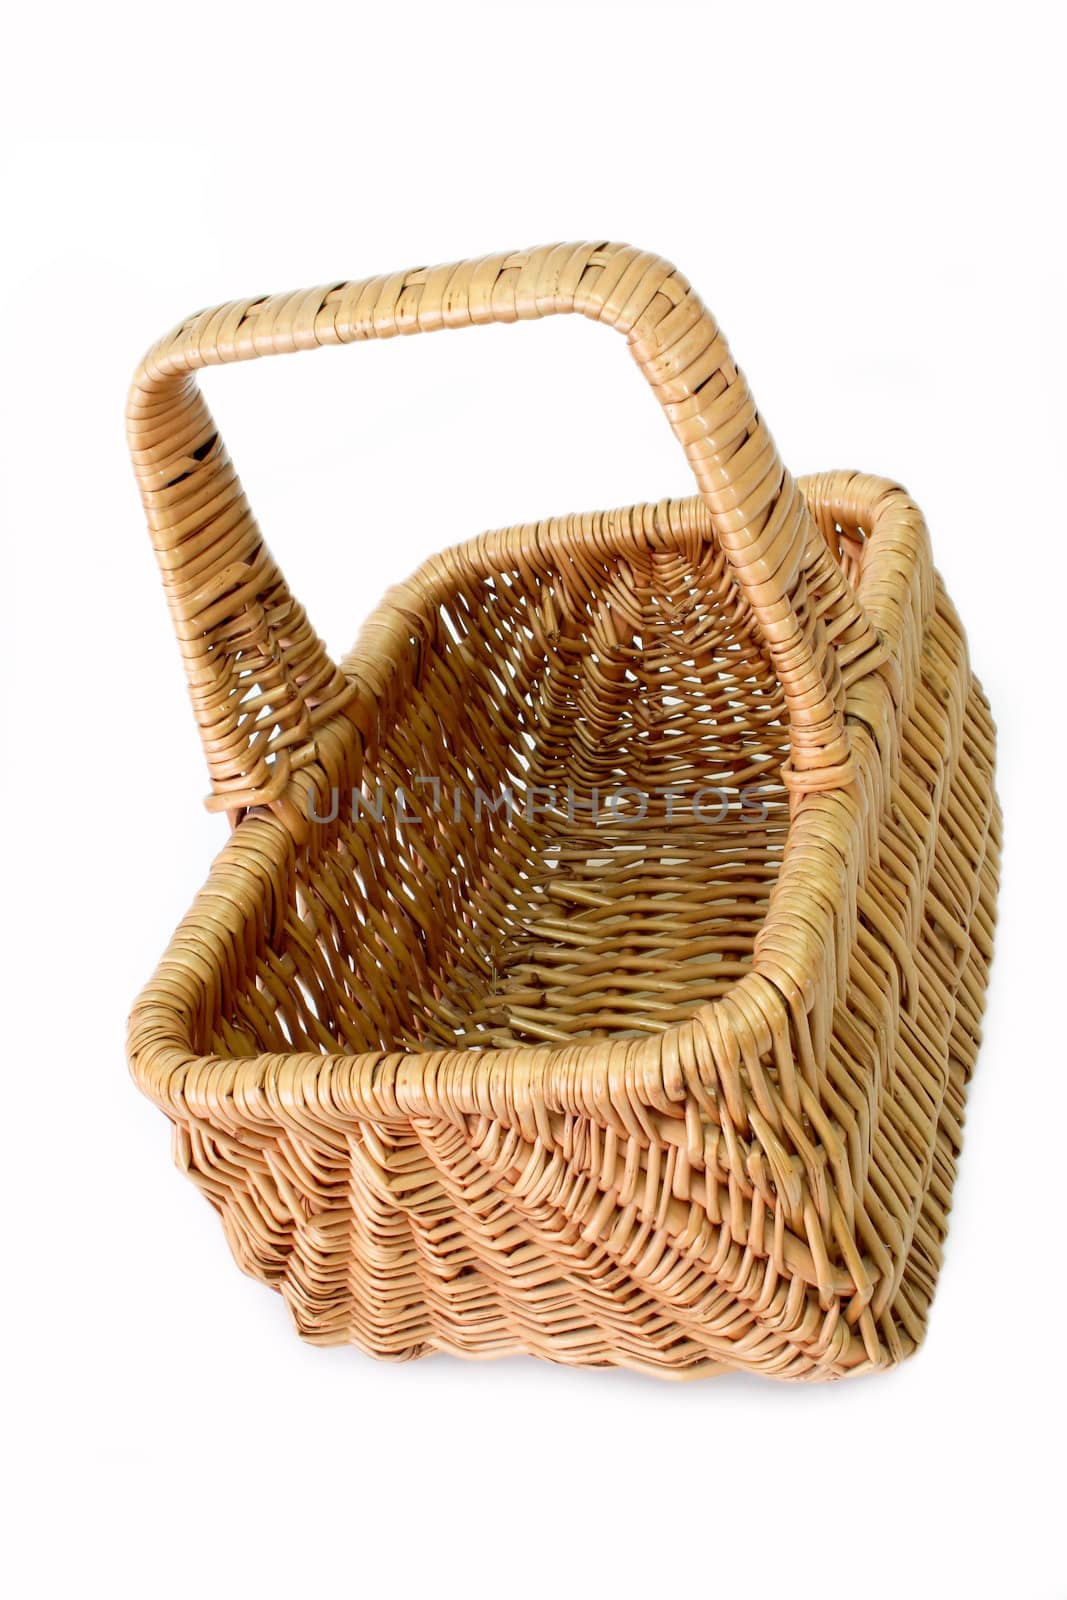 Plaited basket on bright background